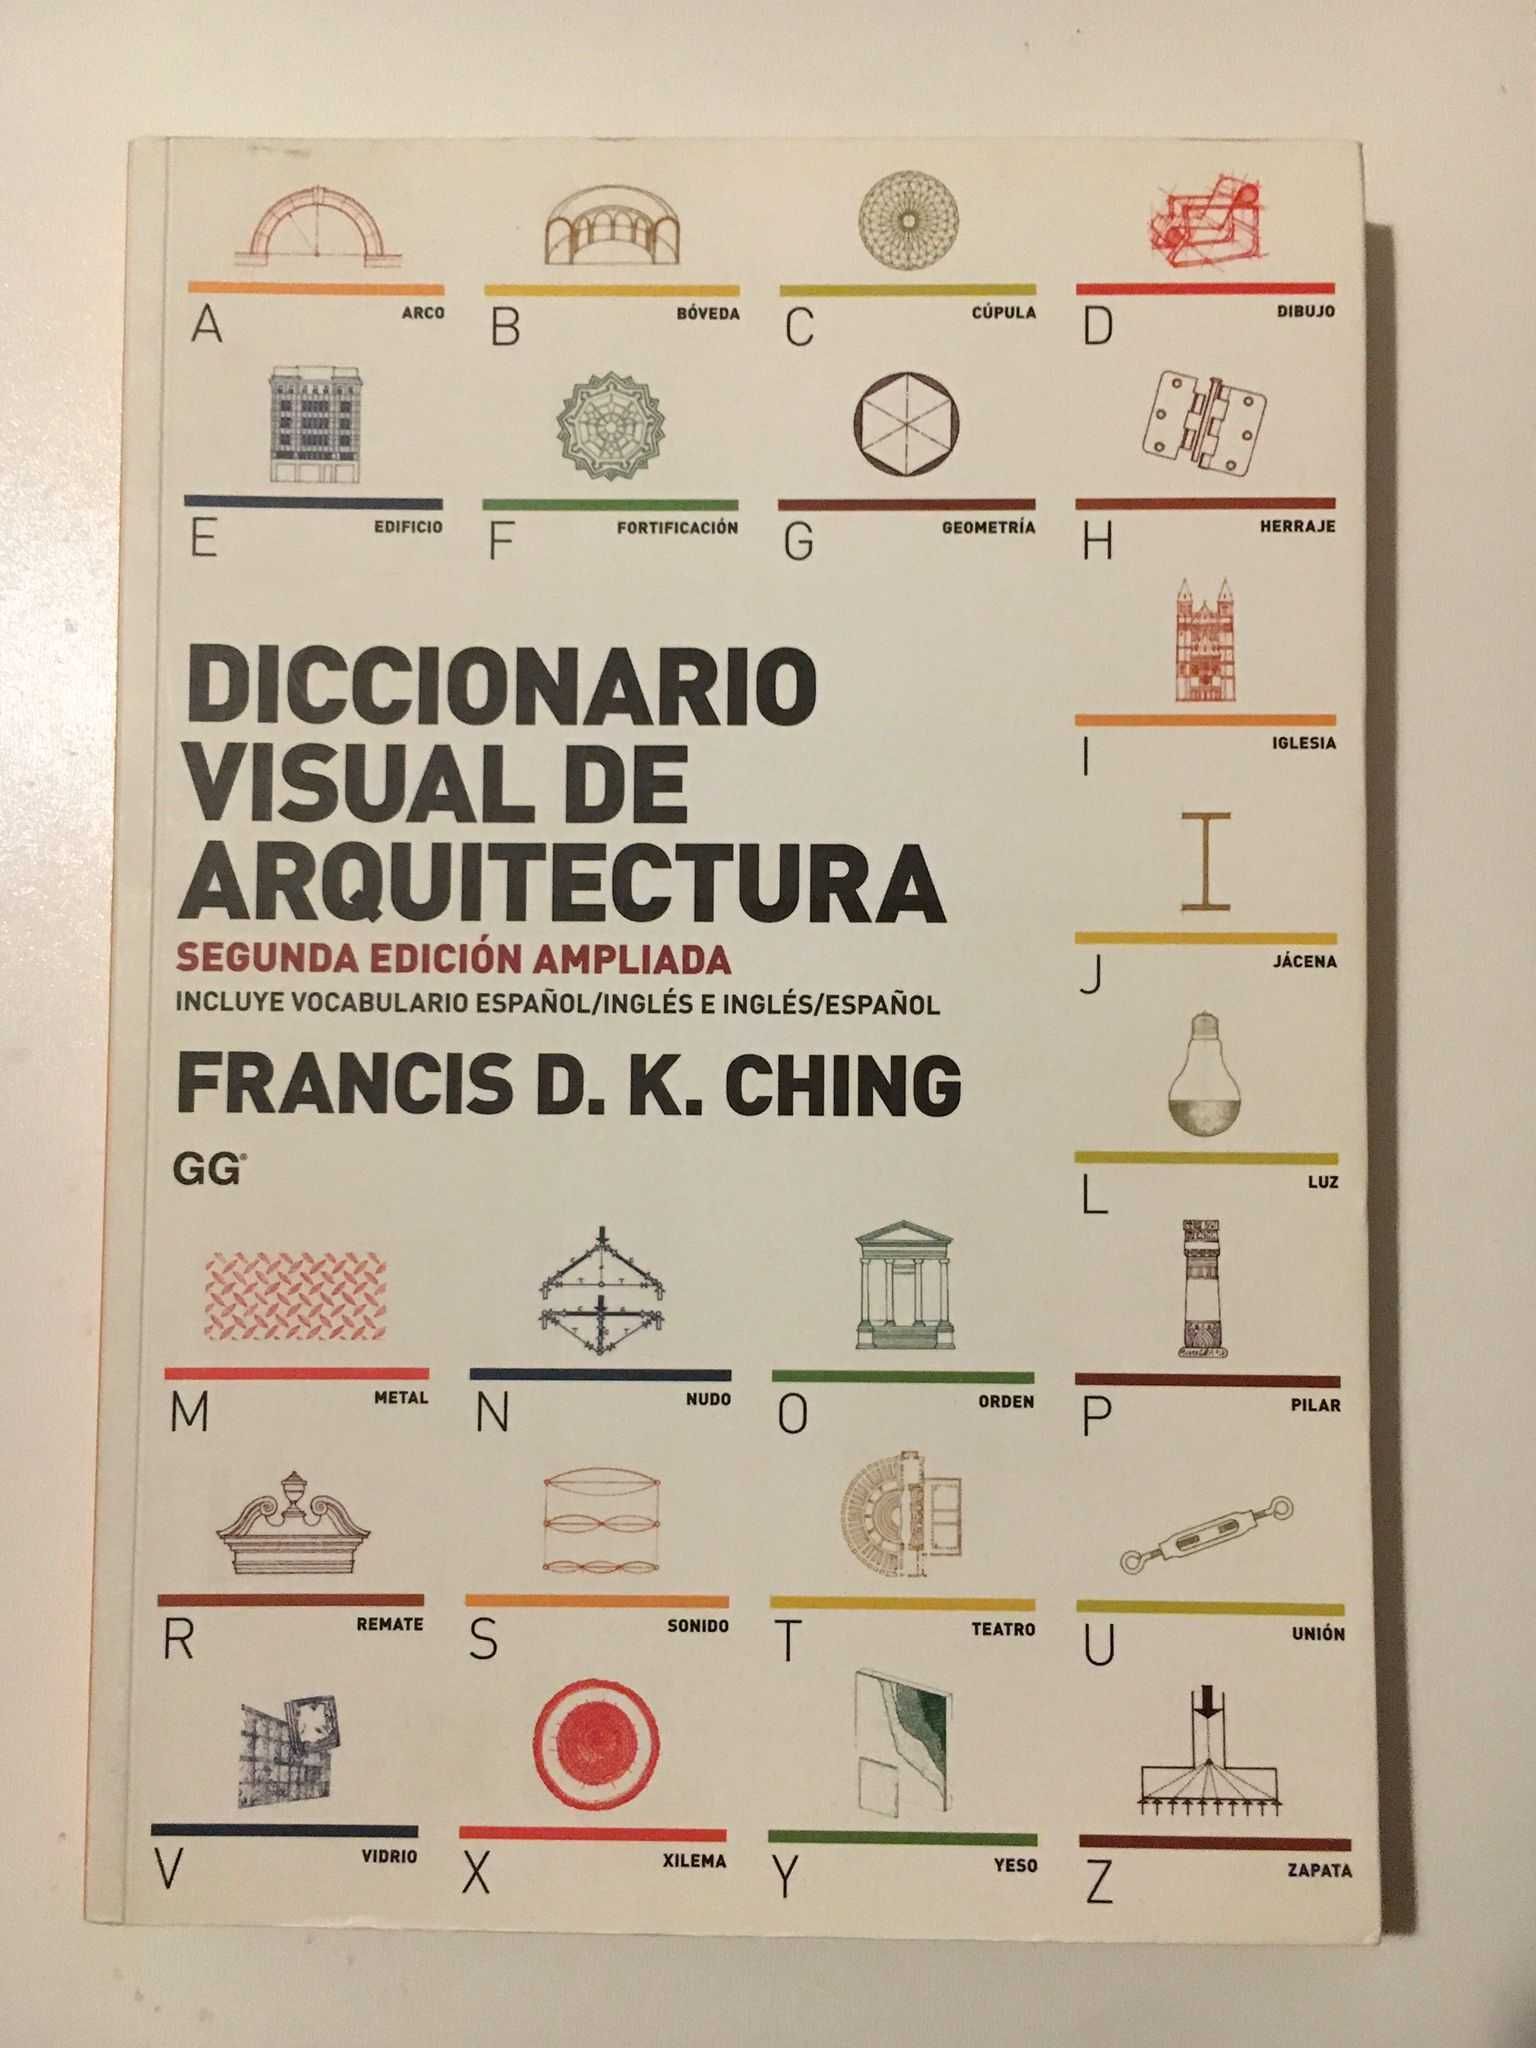 Livro - "Diccionario Visual de Arquitectura" - de Francis D. K. Ching